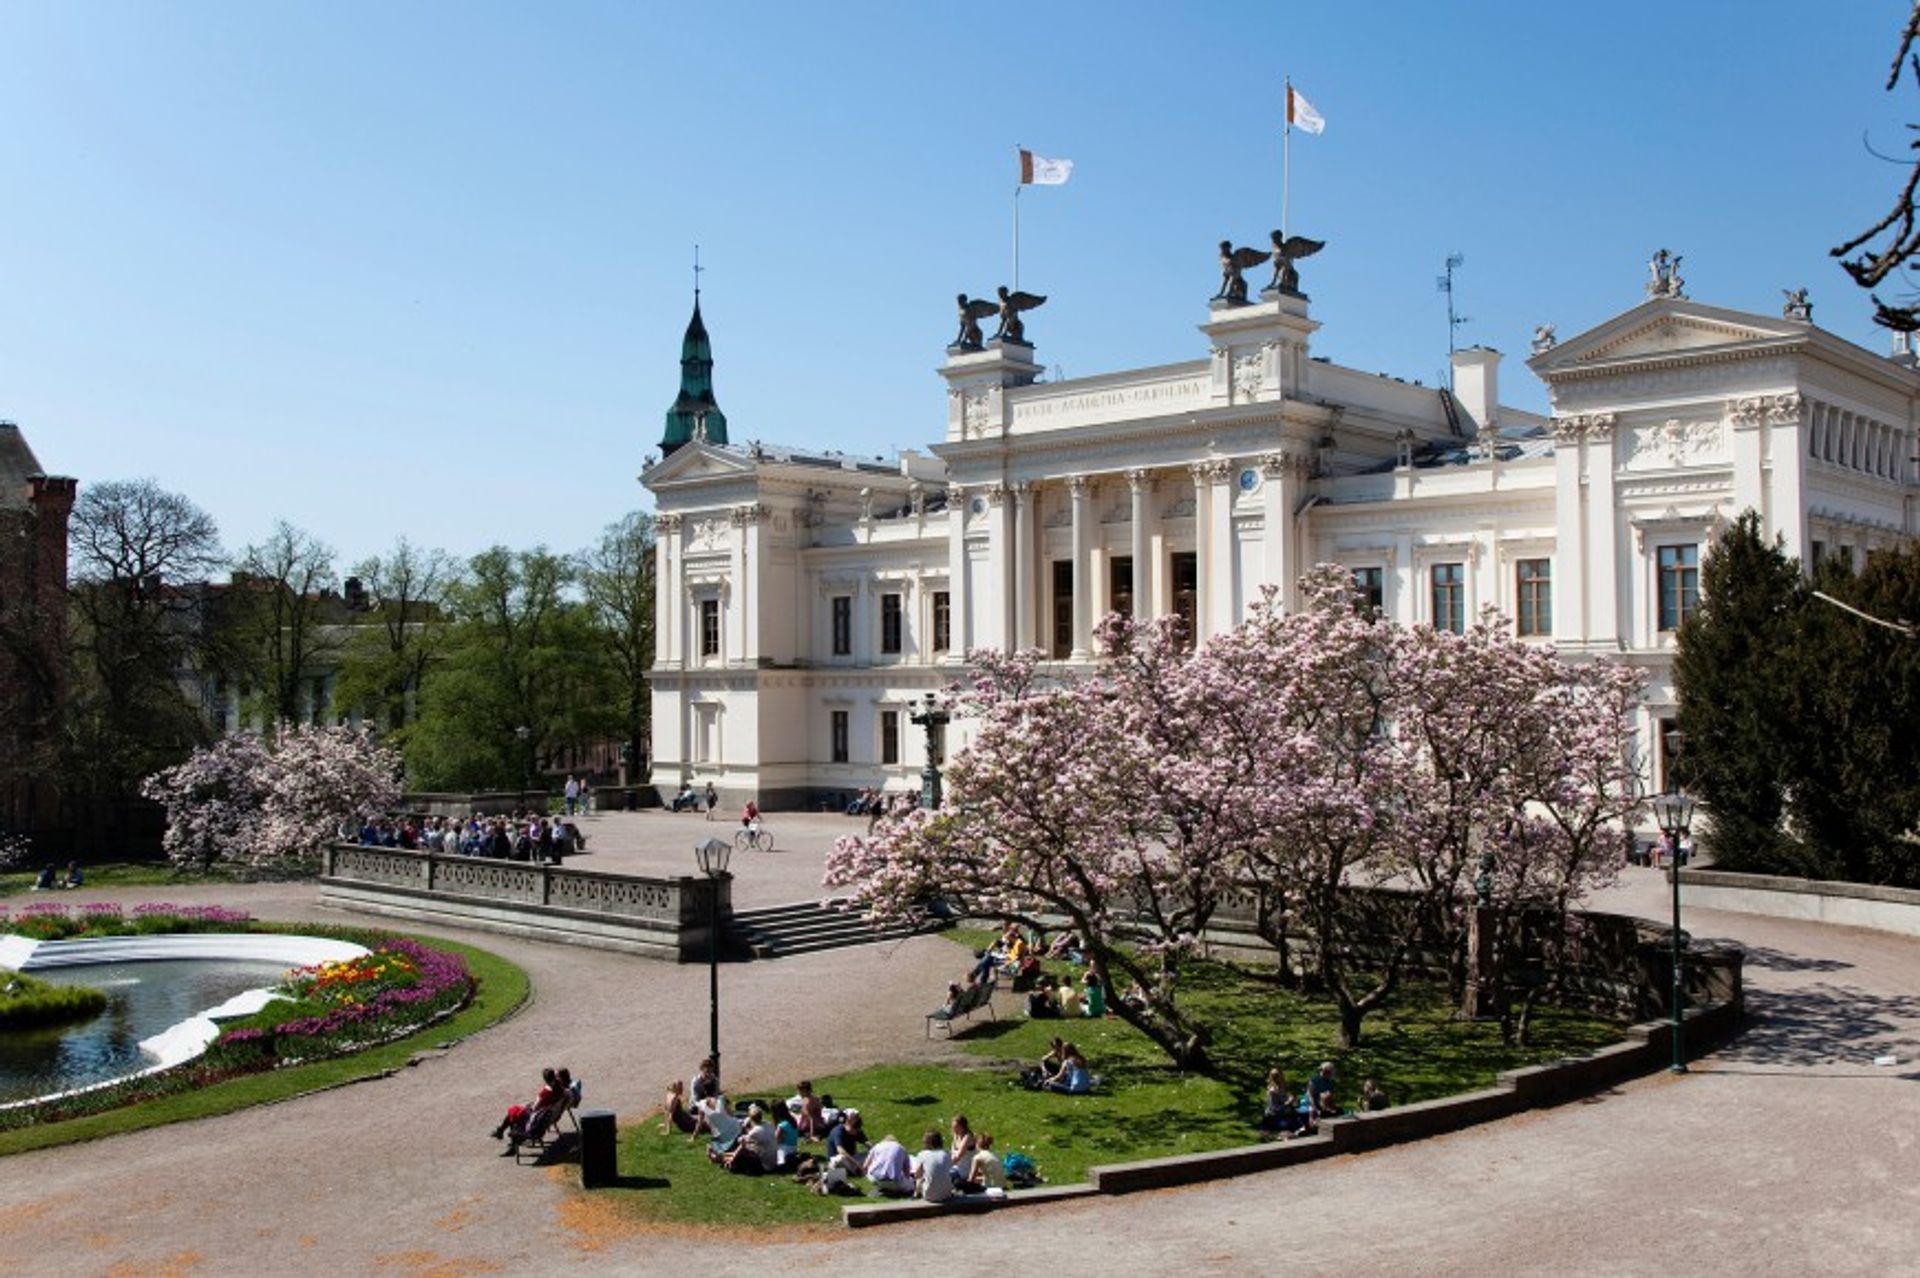 University of Lund